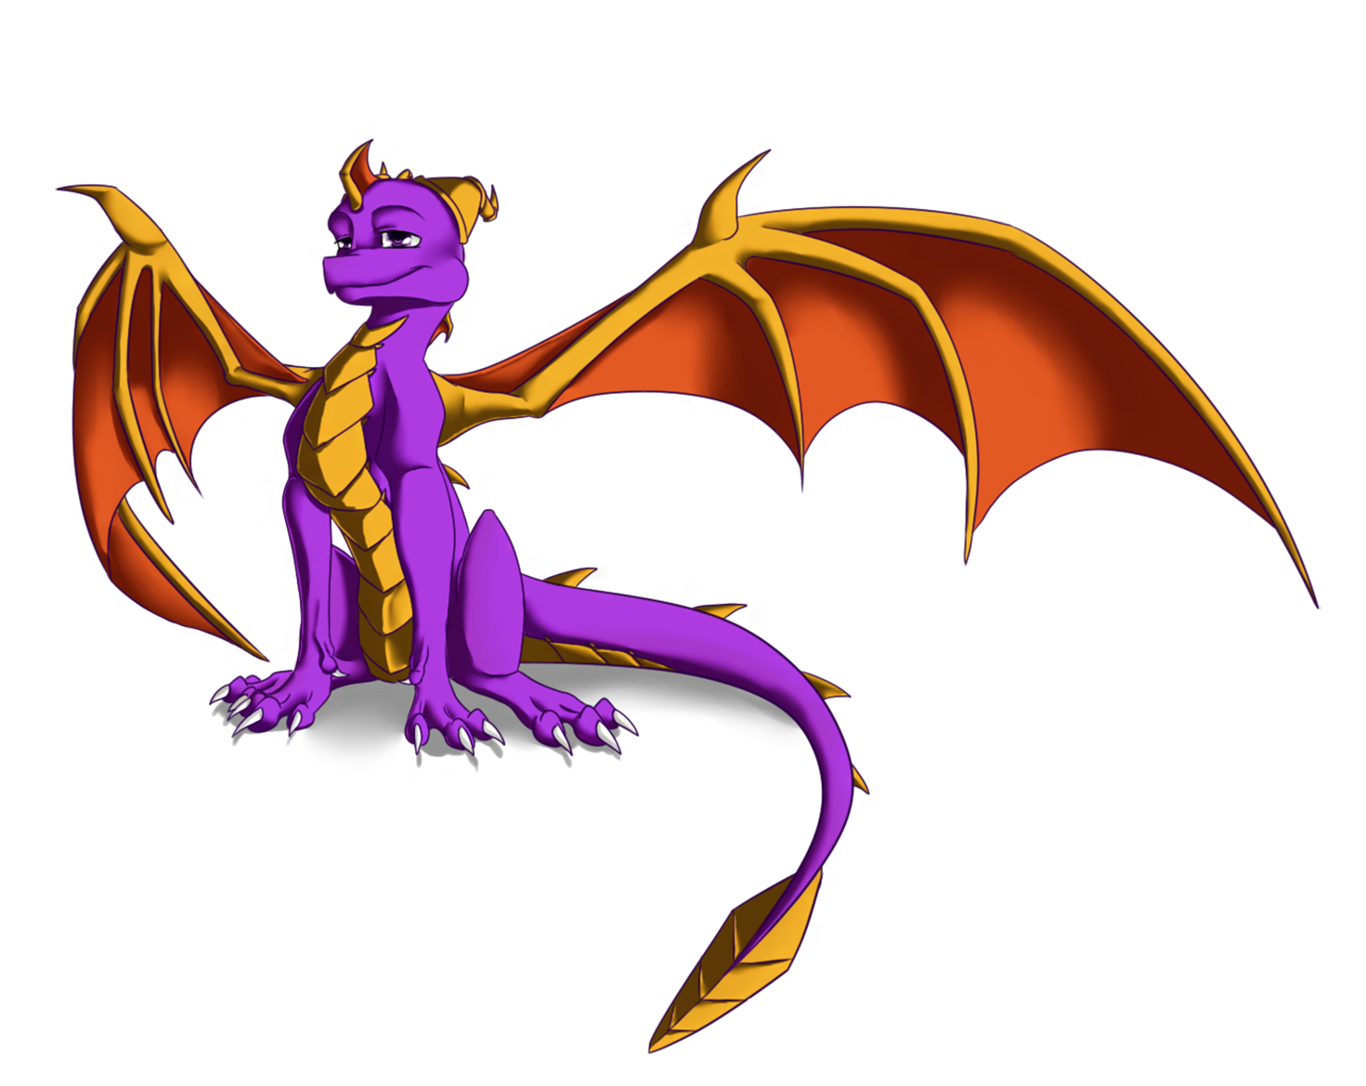 Video Game Spyro the Dragon Wallpaper by illegal-spyro-fan